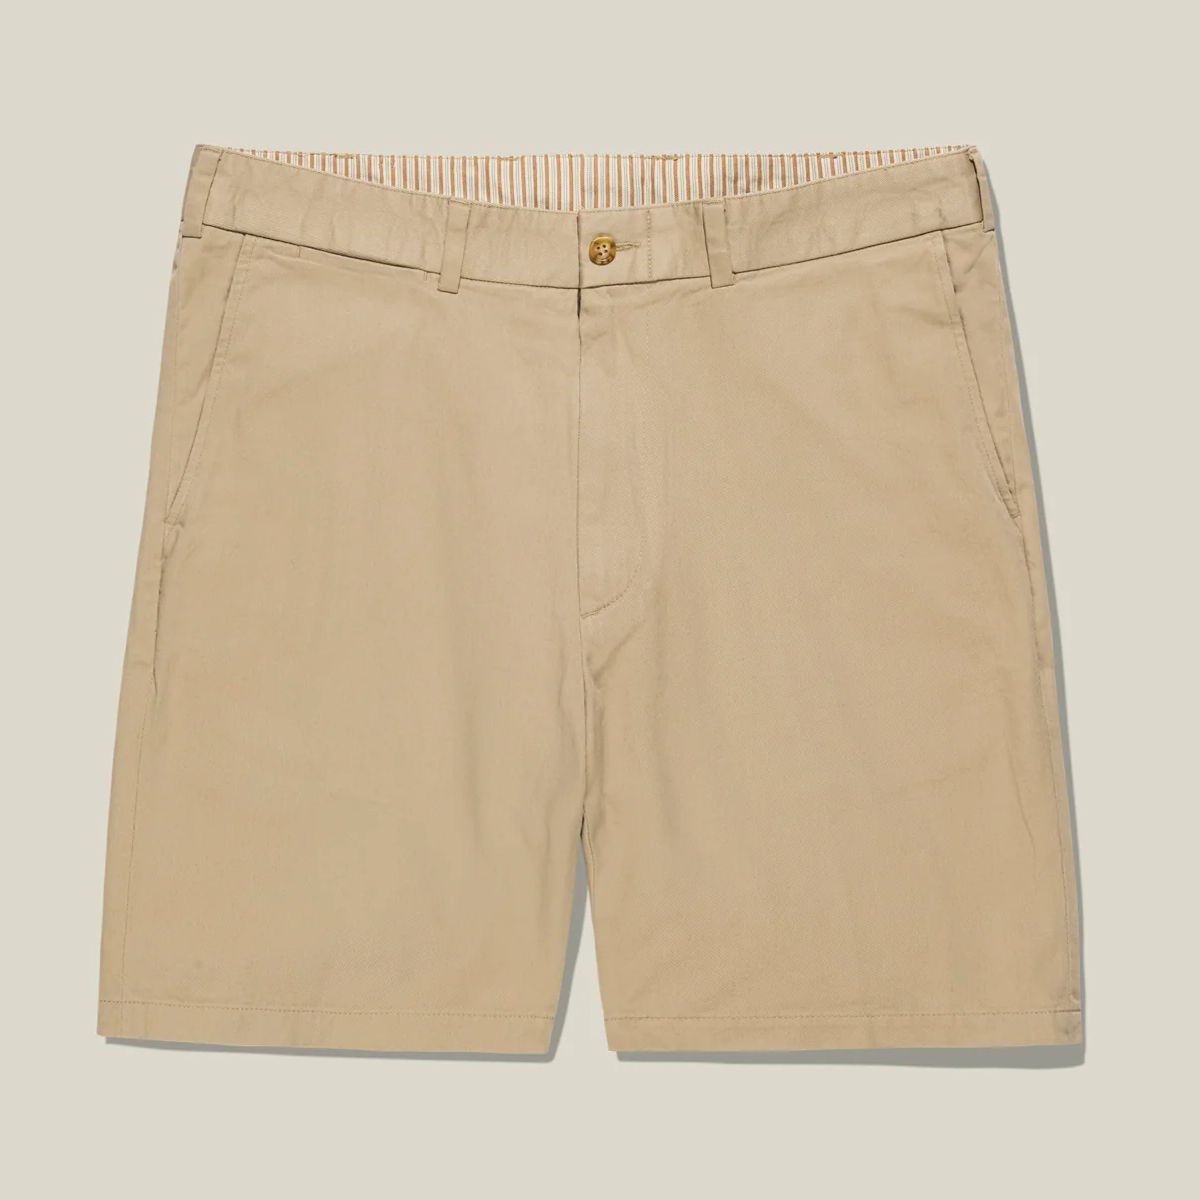 M3 Straight Fit Vintage Twill Shorts in Khaki by Bills Khakis